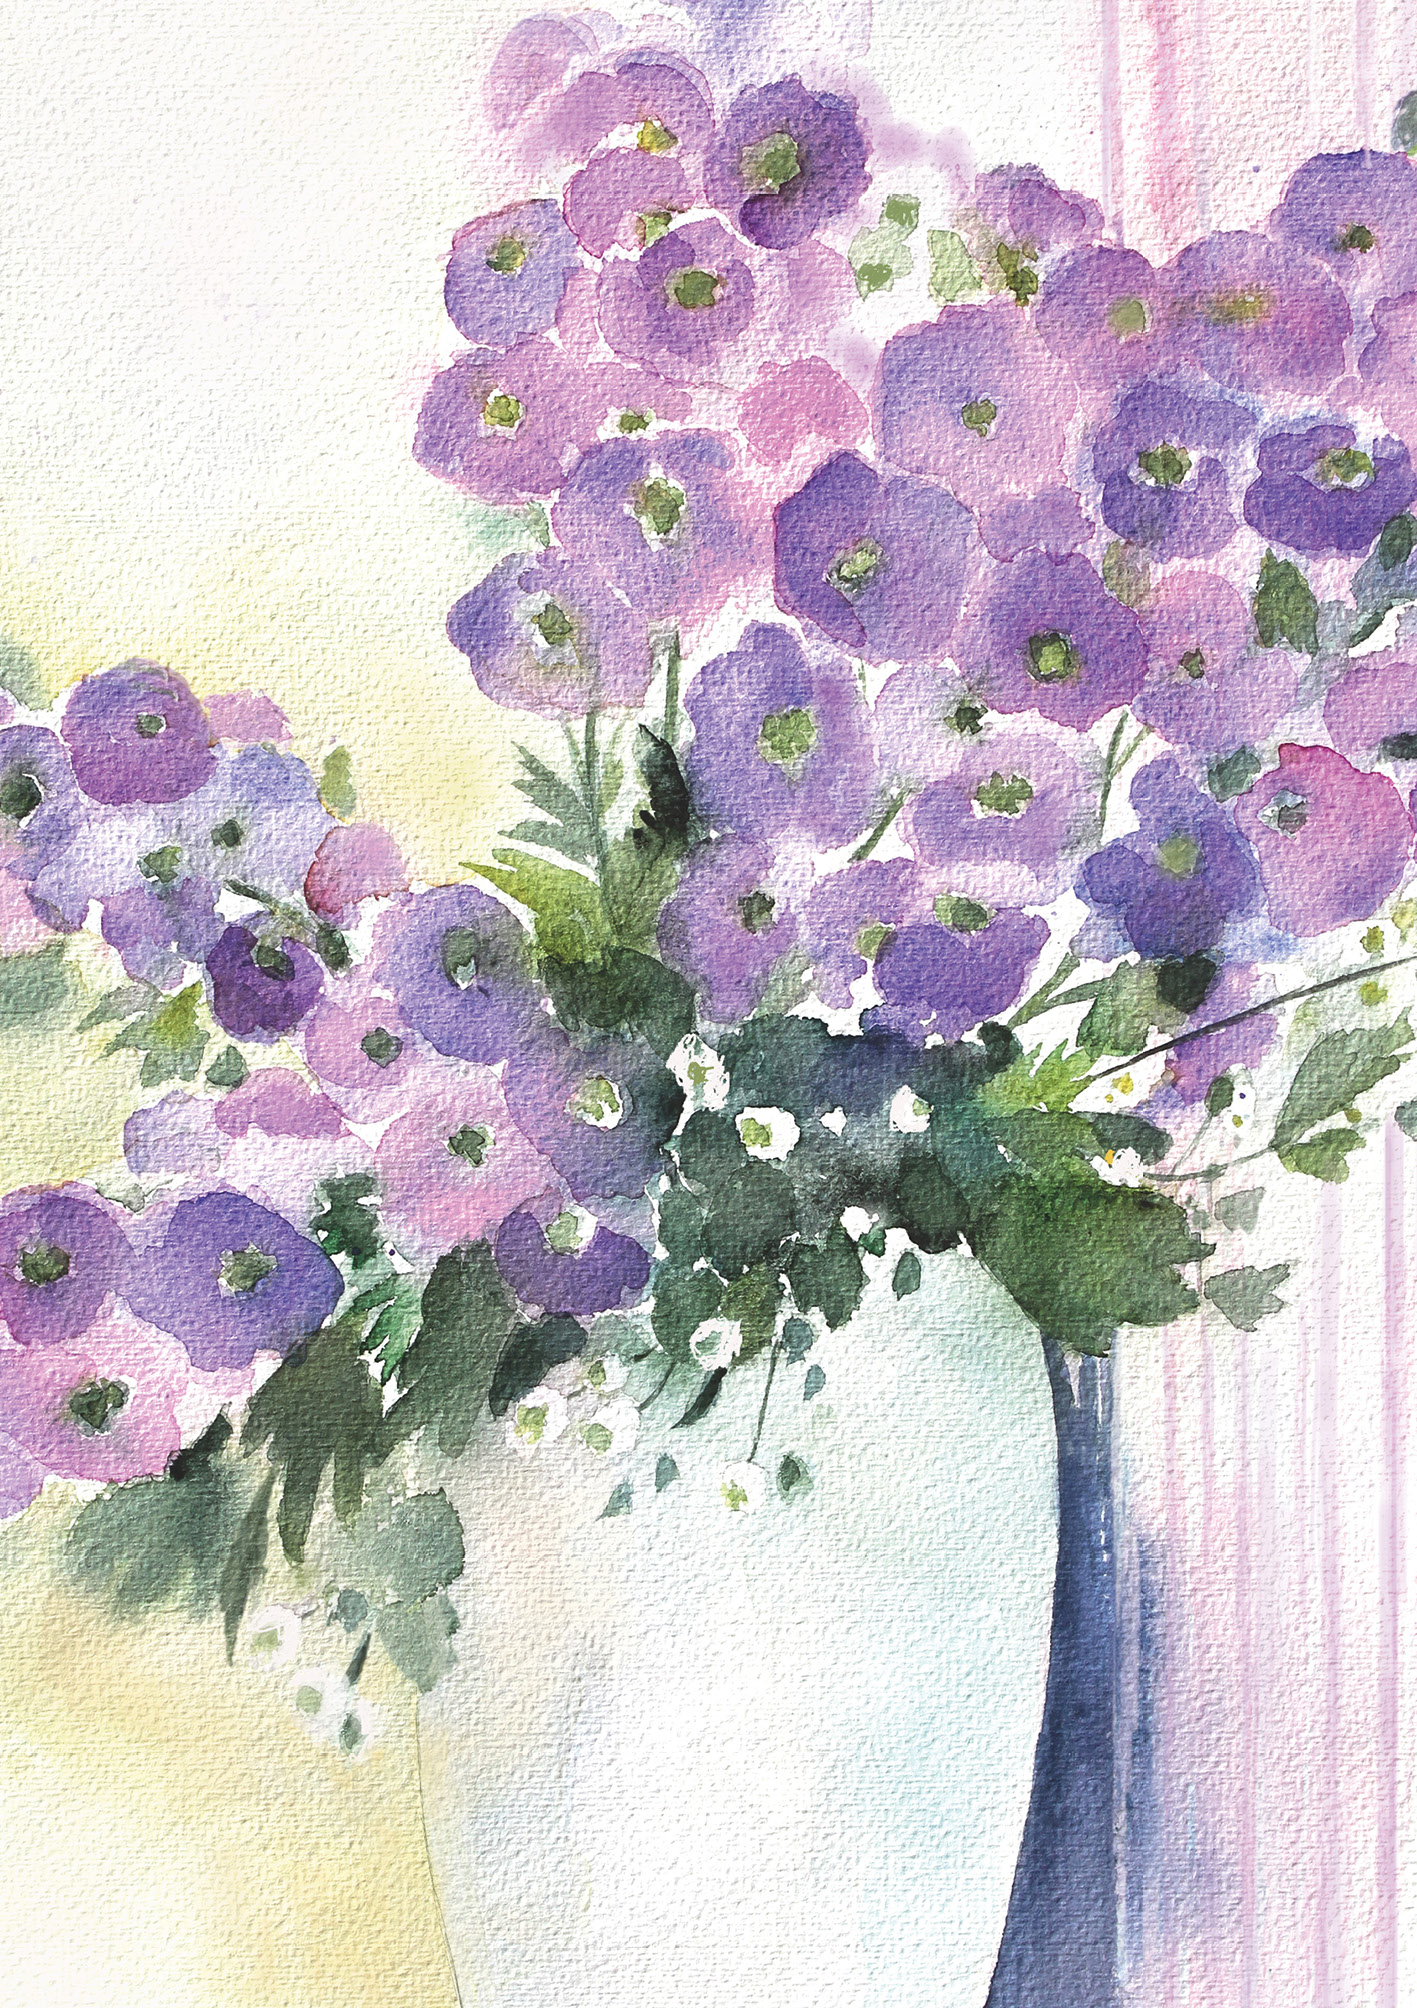  Kunst-Klappkarte - Blumen in Violett